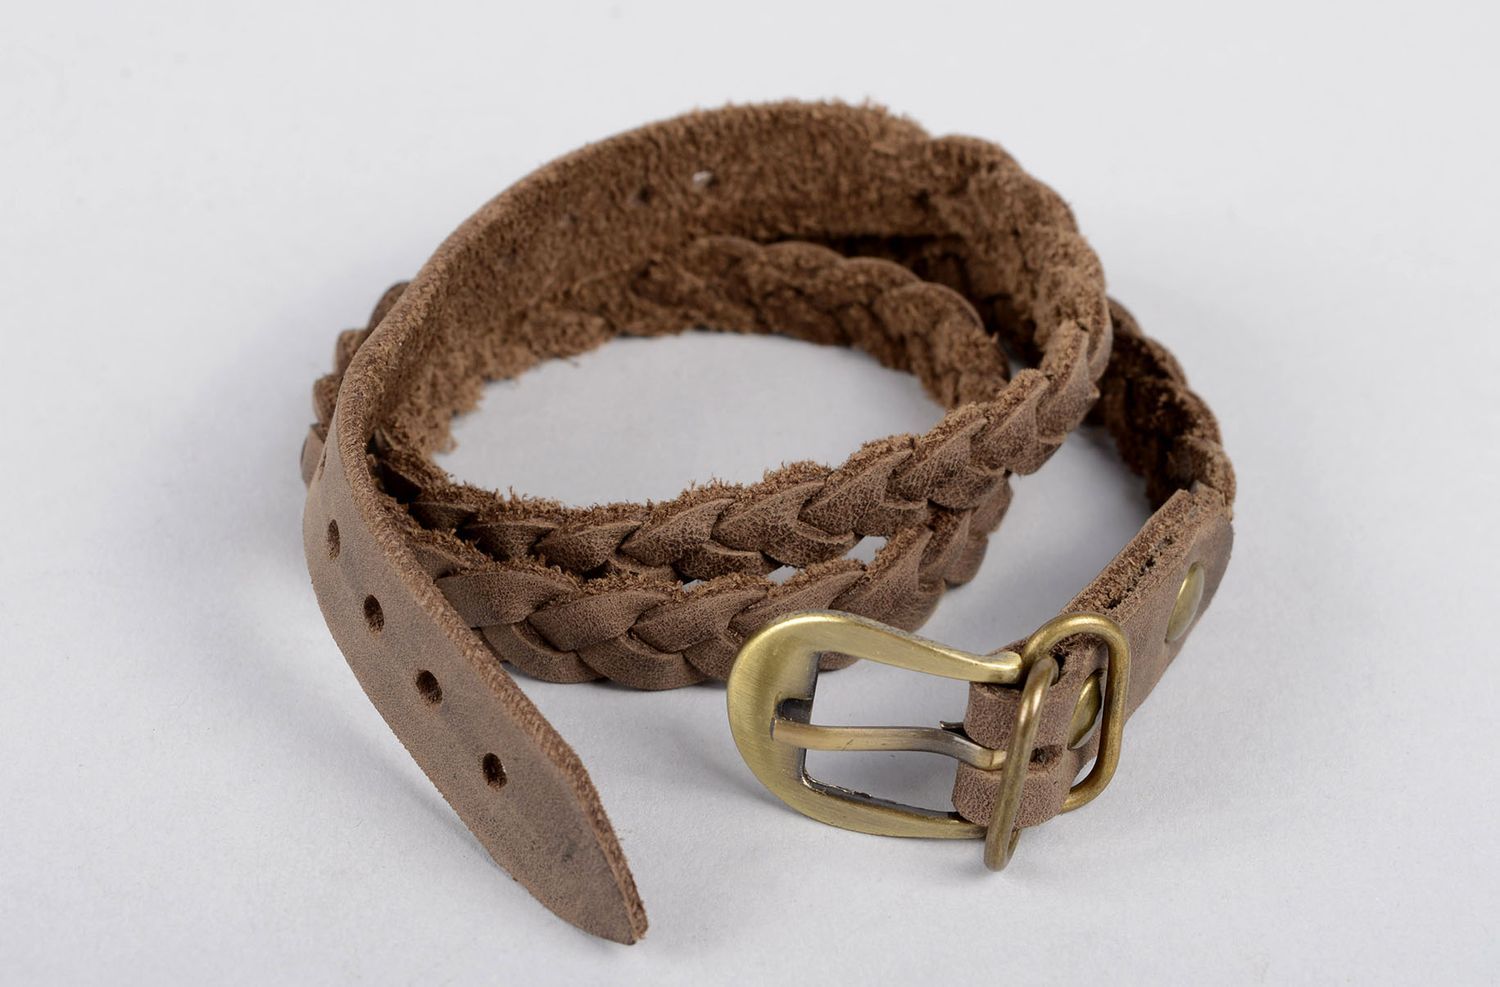 Unusual handmade leather bracelet fashion trends artisan jewelry leather goods photo 4